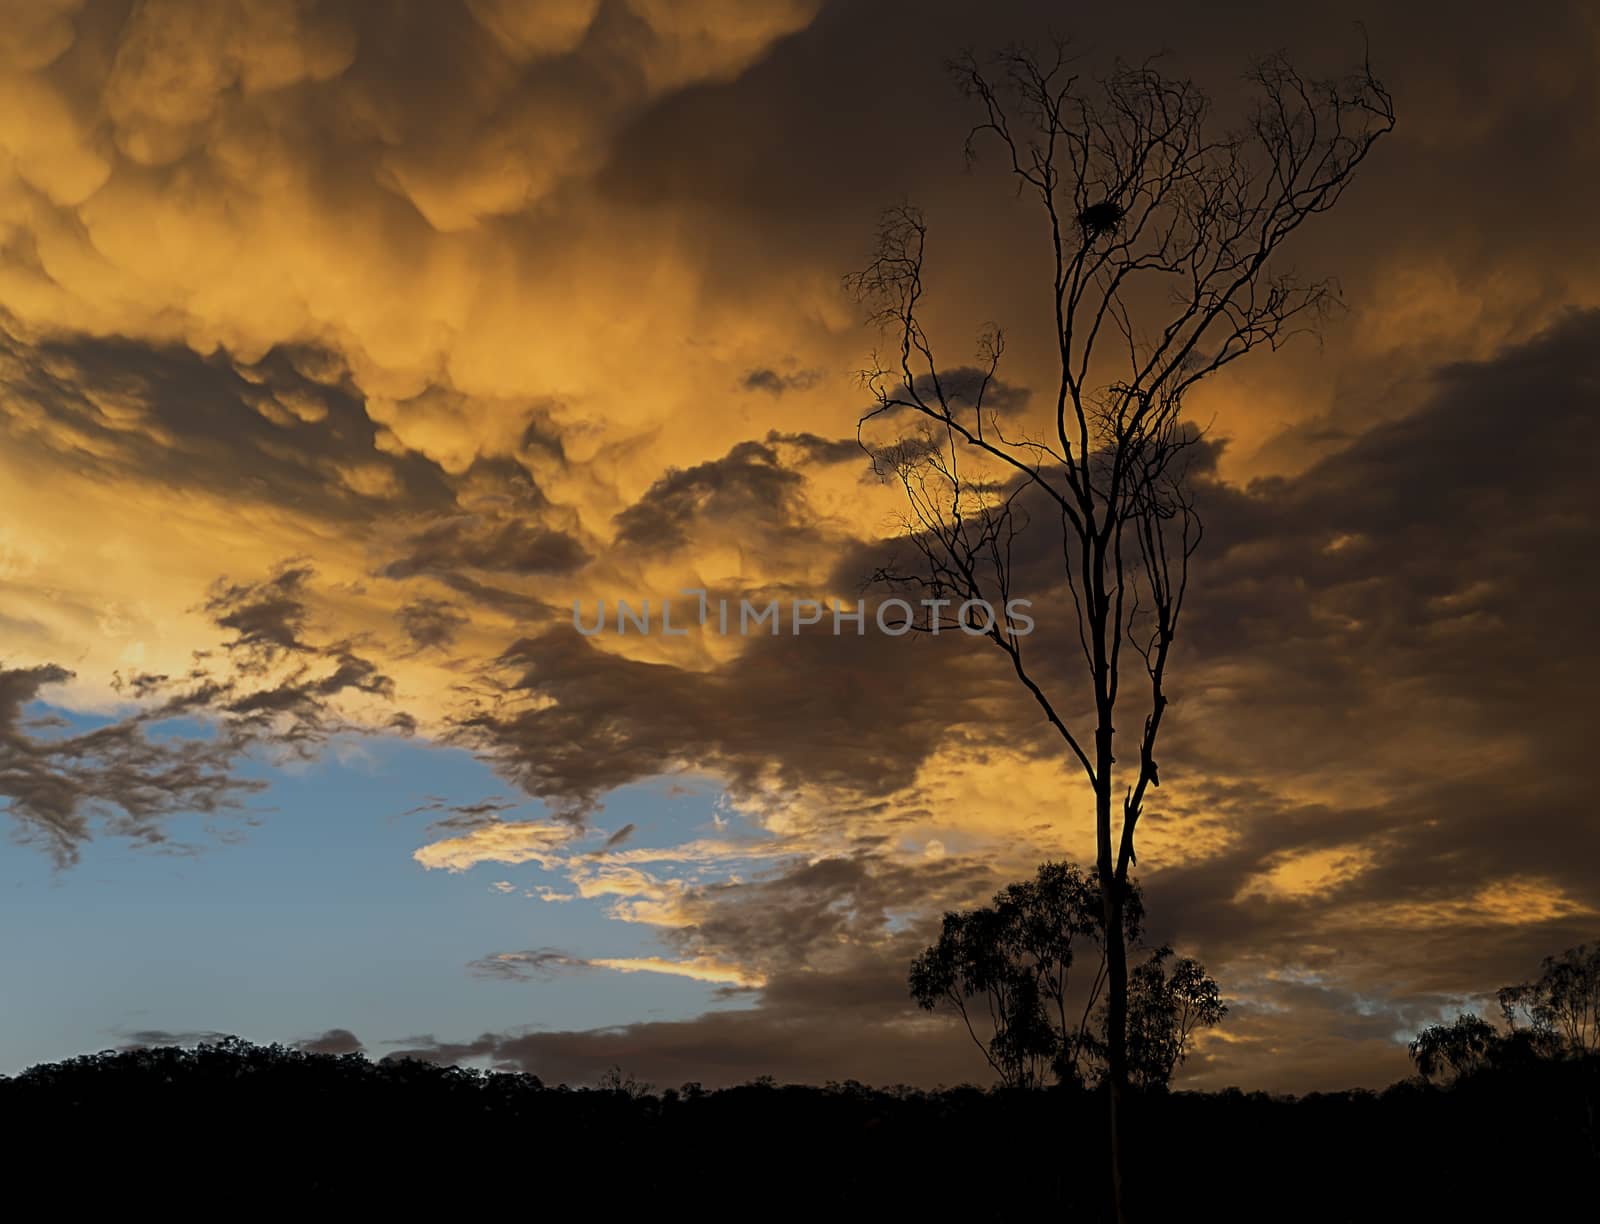 Australian sunset with stormy mammatus clouds by sherj